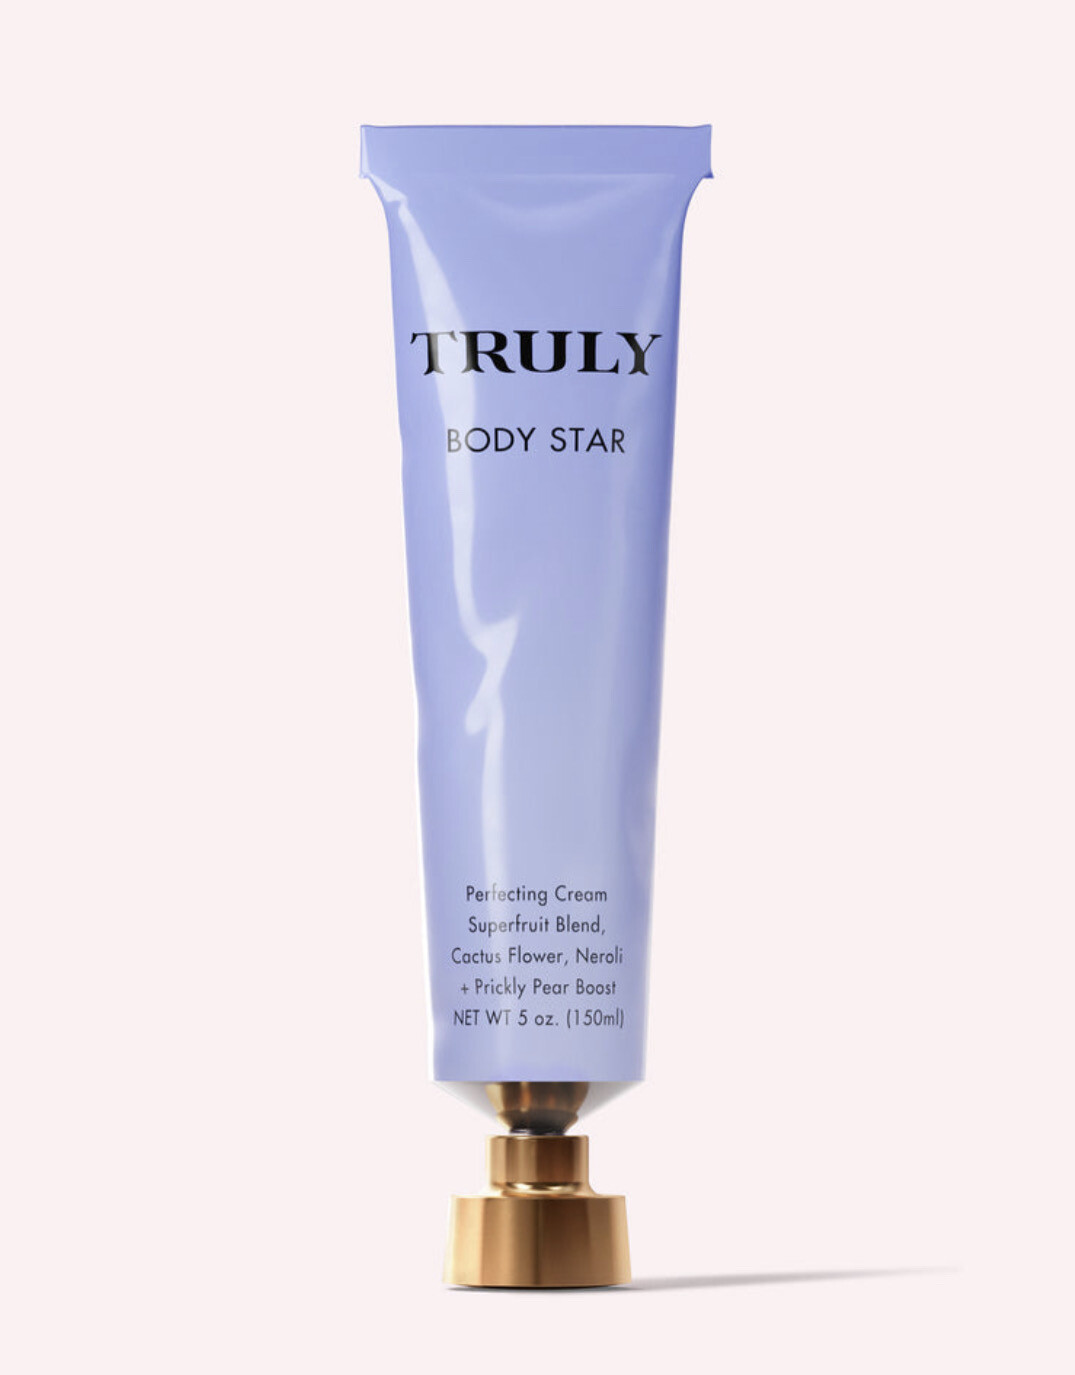 TRULY - Body Star Perfecting Cream